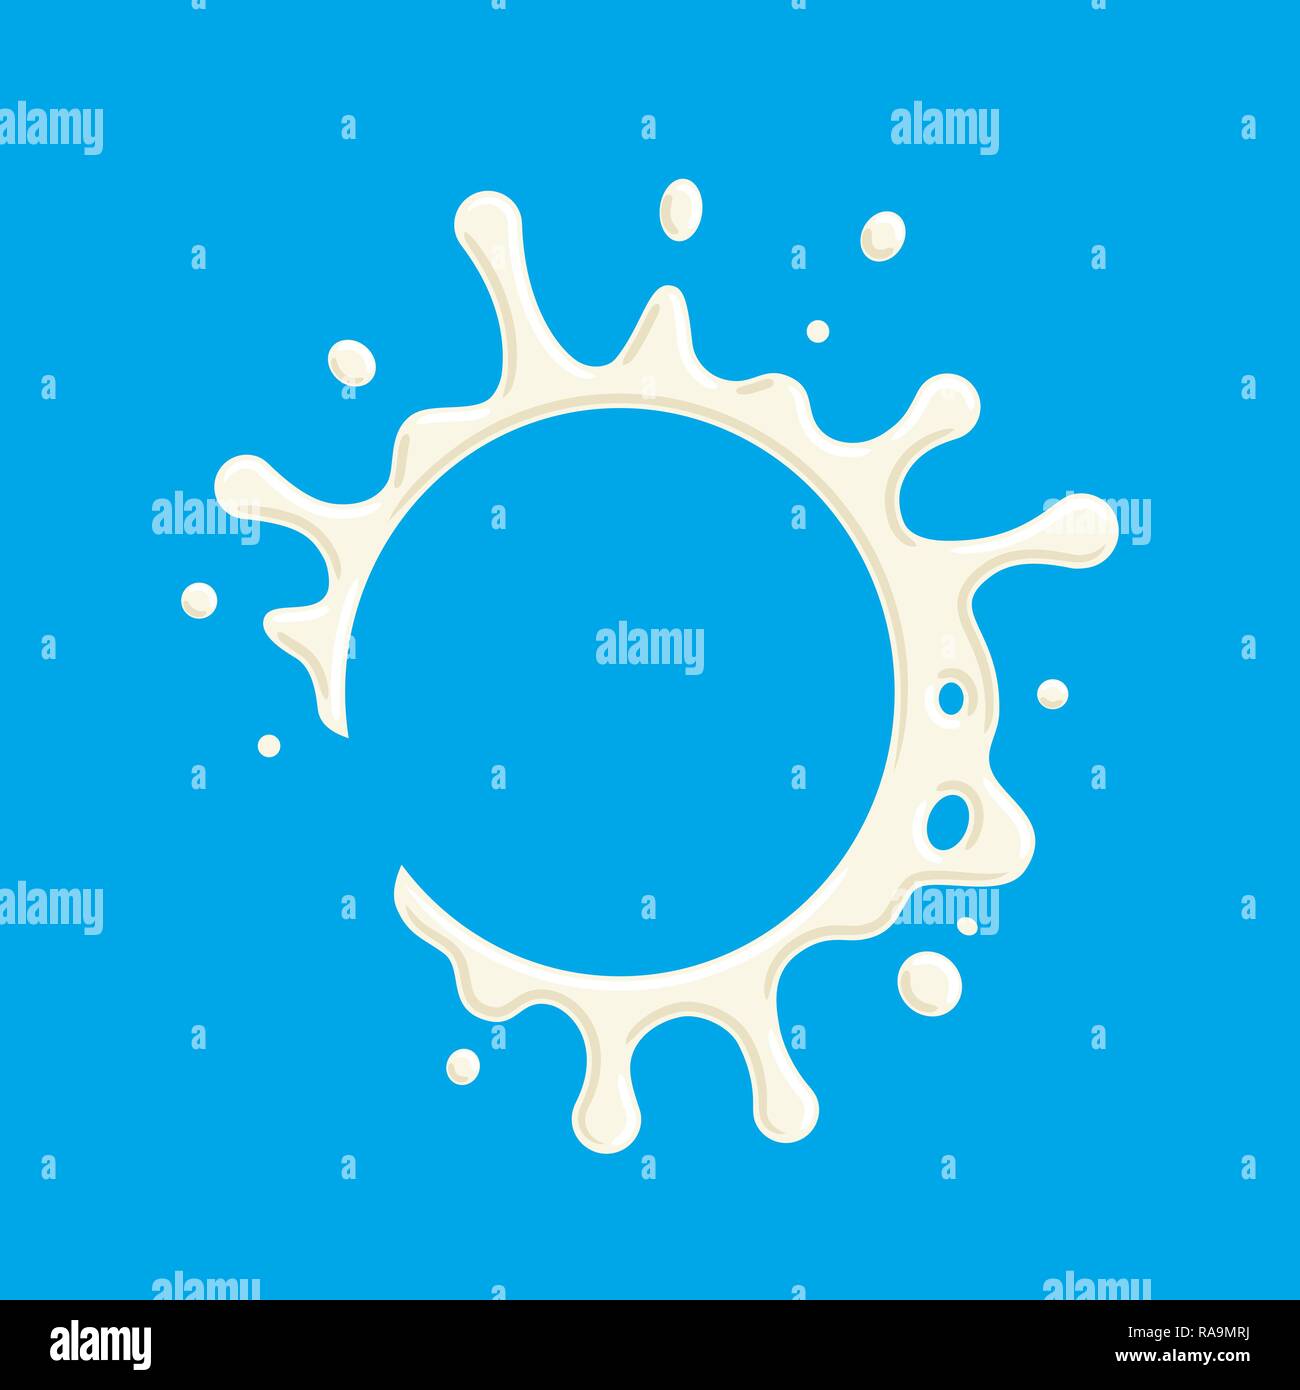 milk label vector. Milk splash and blot design, shape creative illustration. Stock Vector